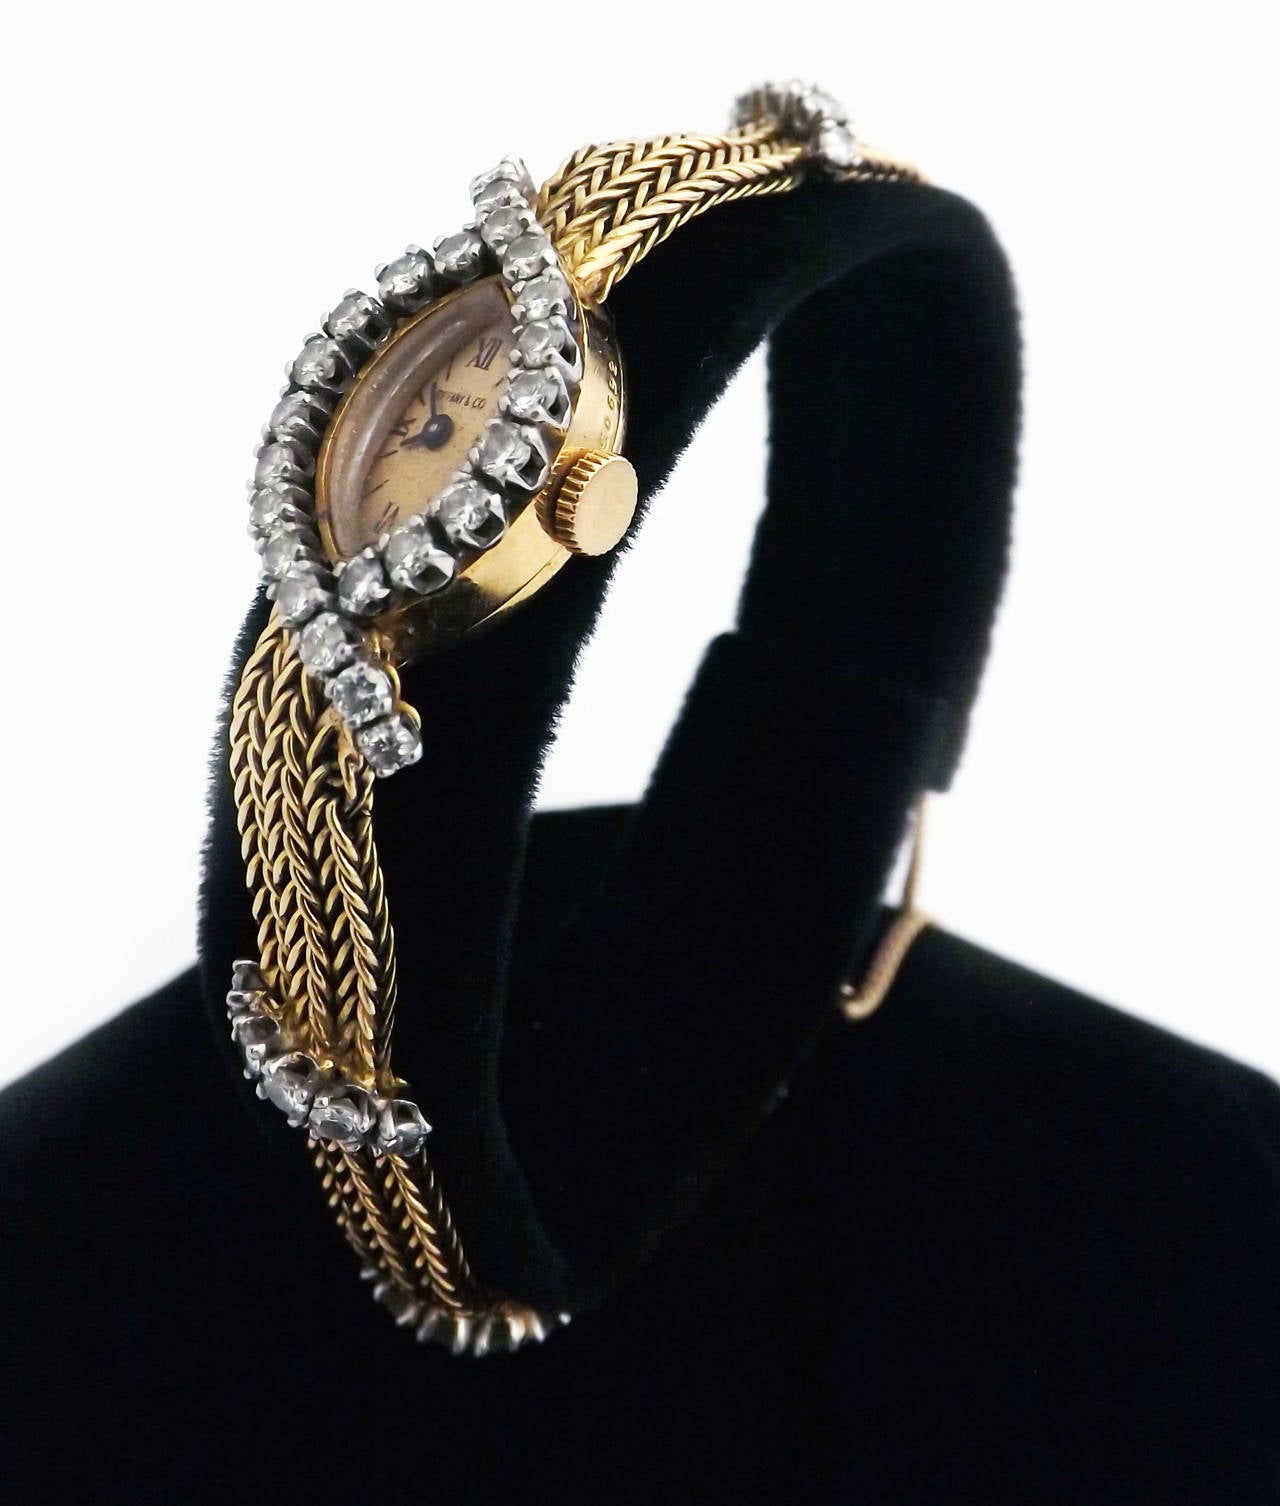 Women's Tiffany & Co. Lady's Yellow Gold and Diamond Bracelet Watch circa 1960s